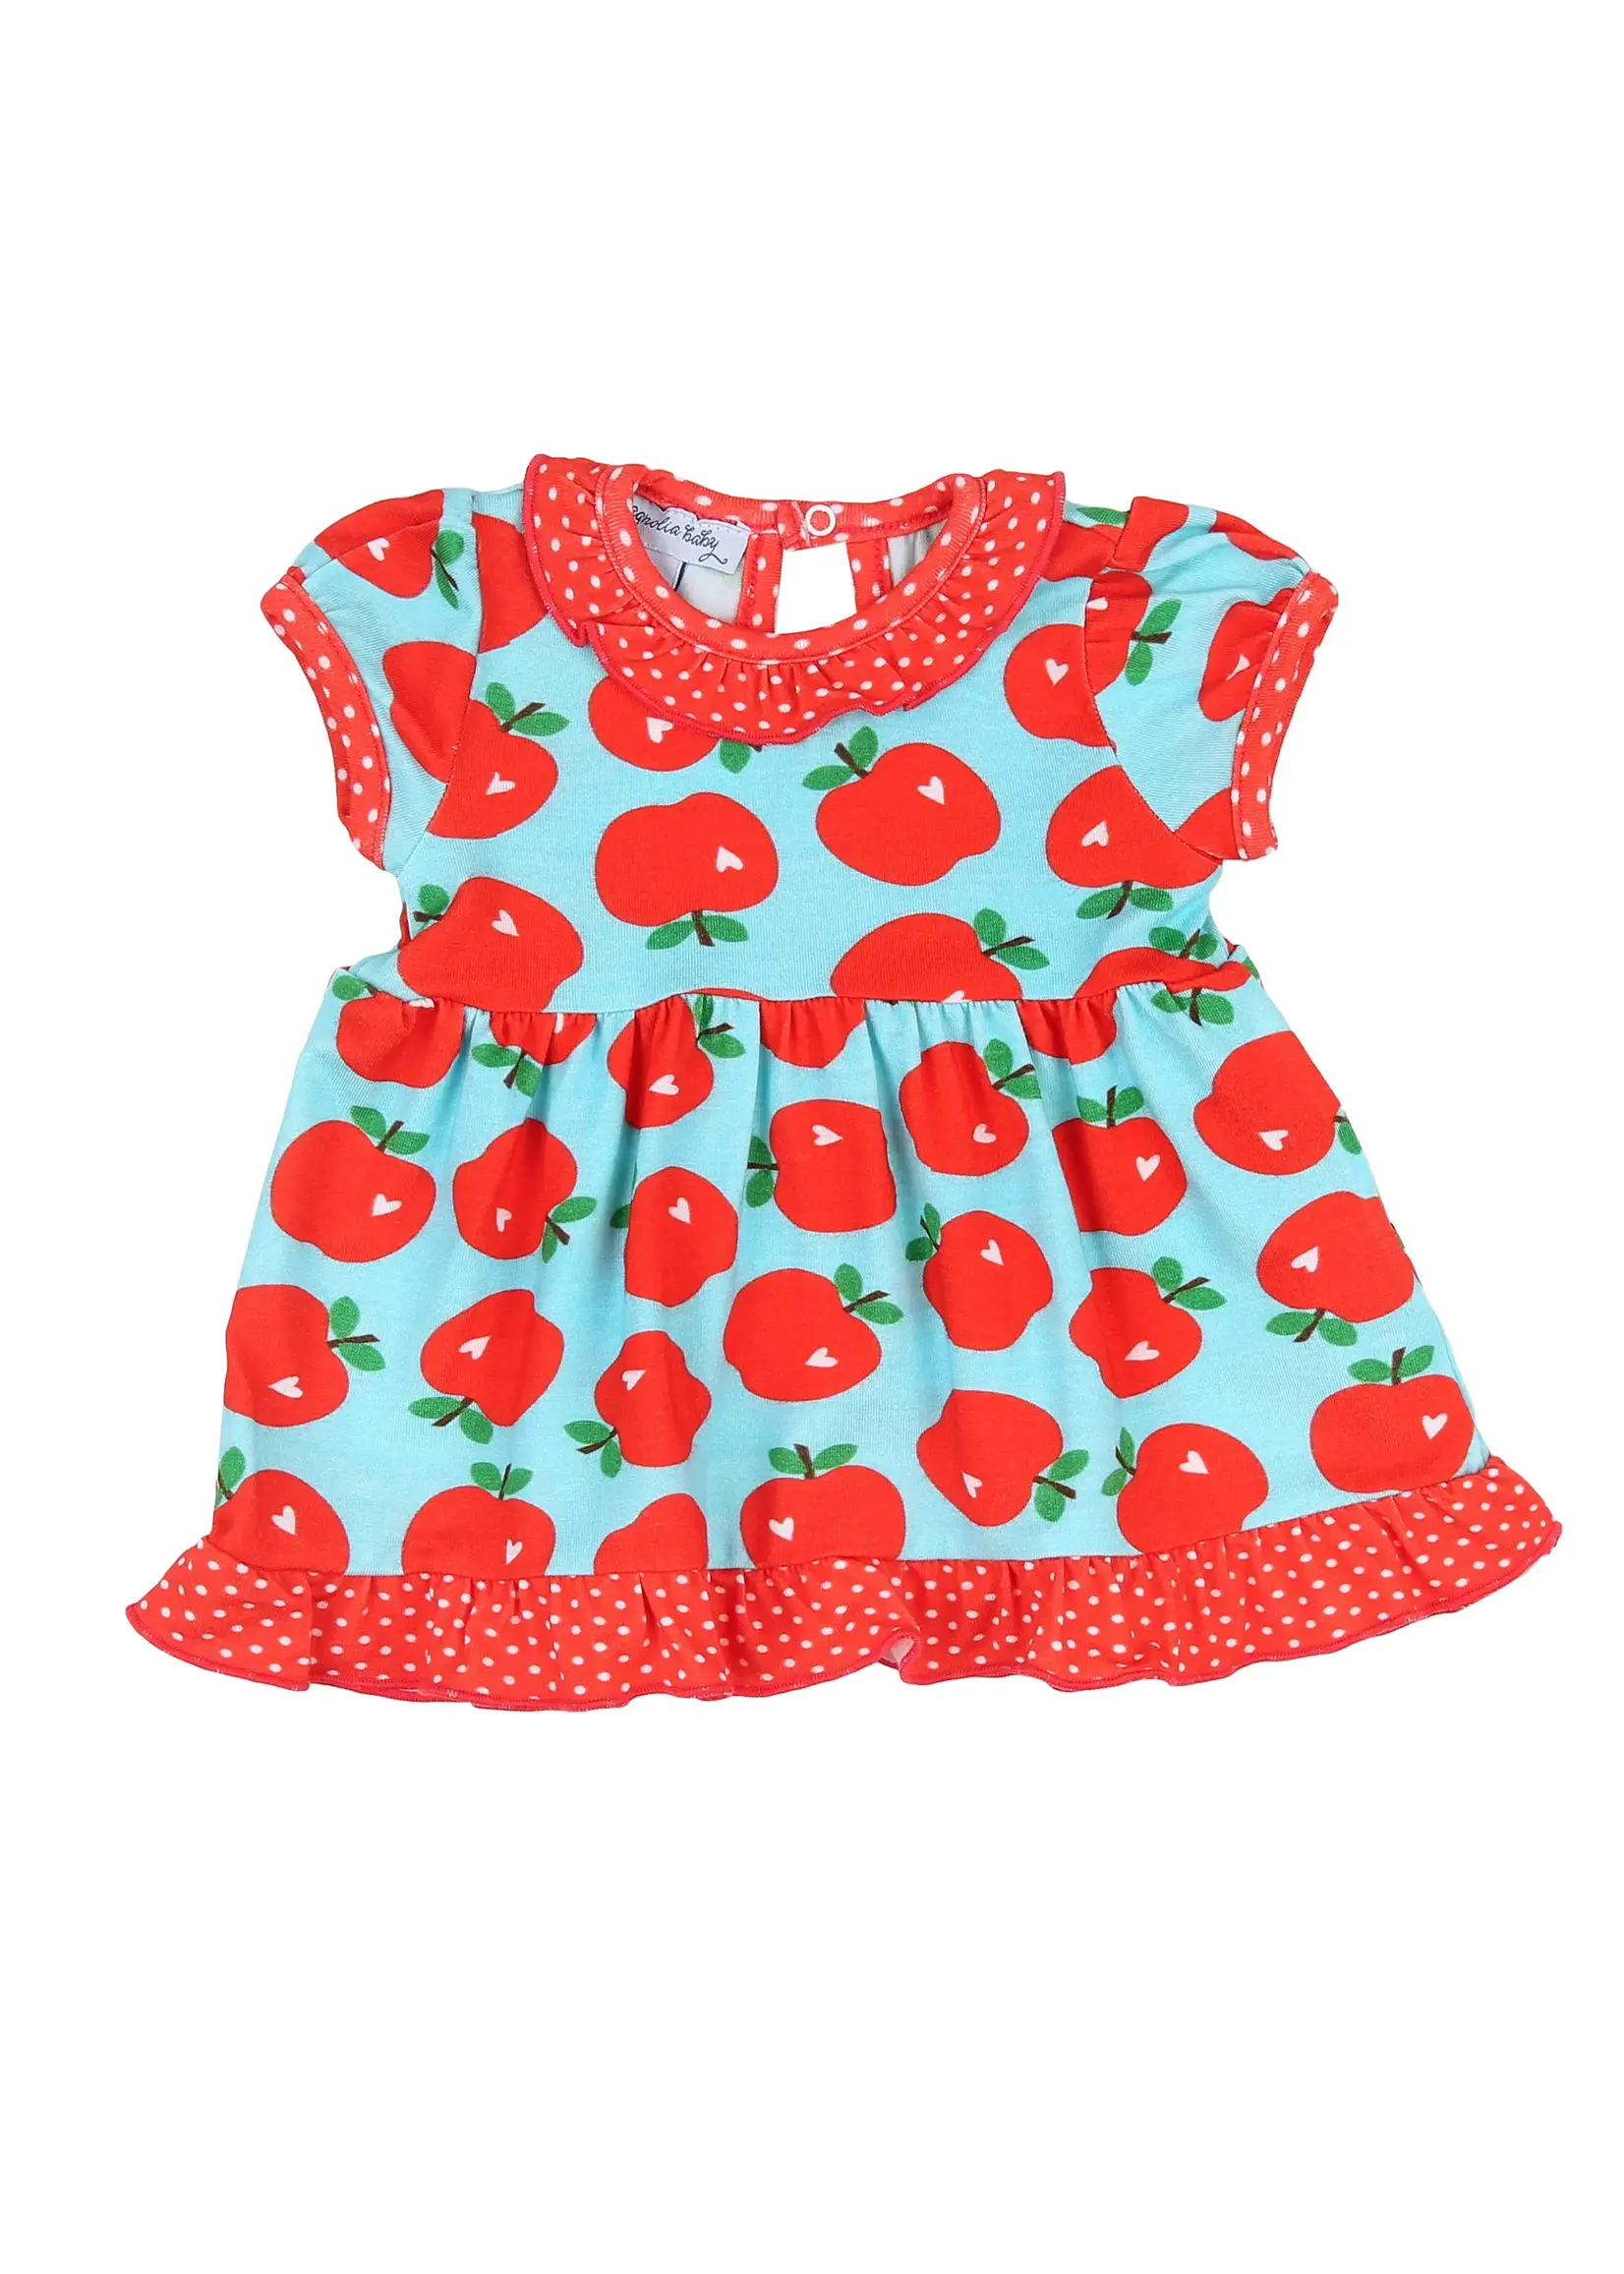 Magnolia Baby Apples Galore Toddler Dress